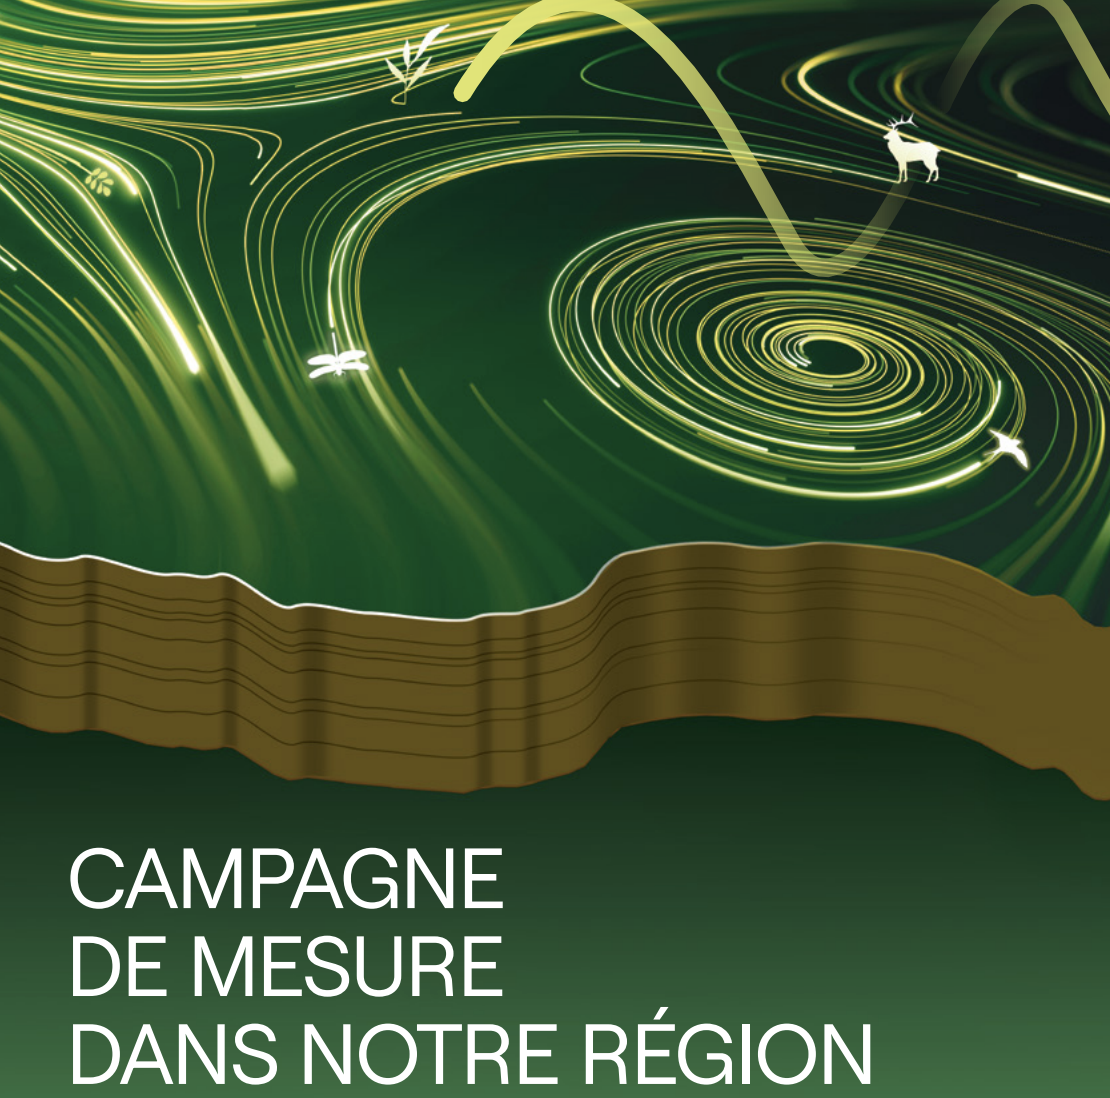 Cover image of depliant for Campagne de mesure